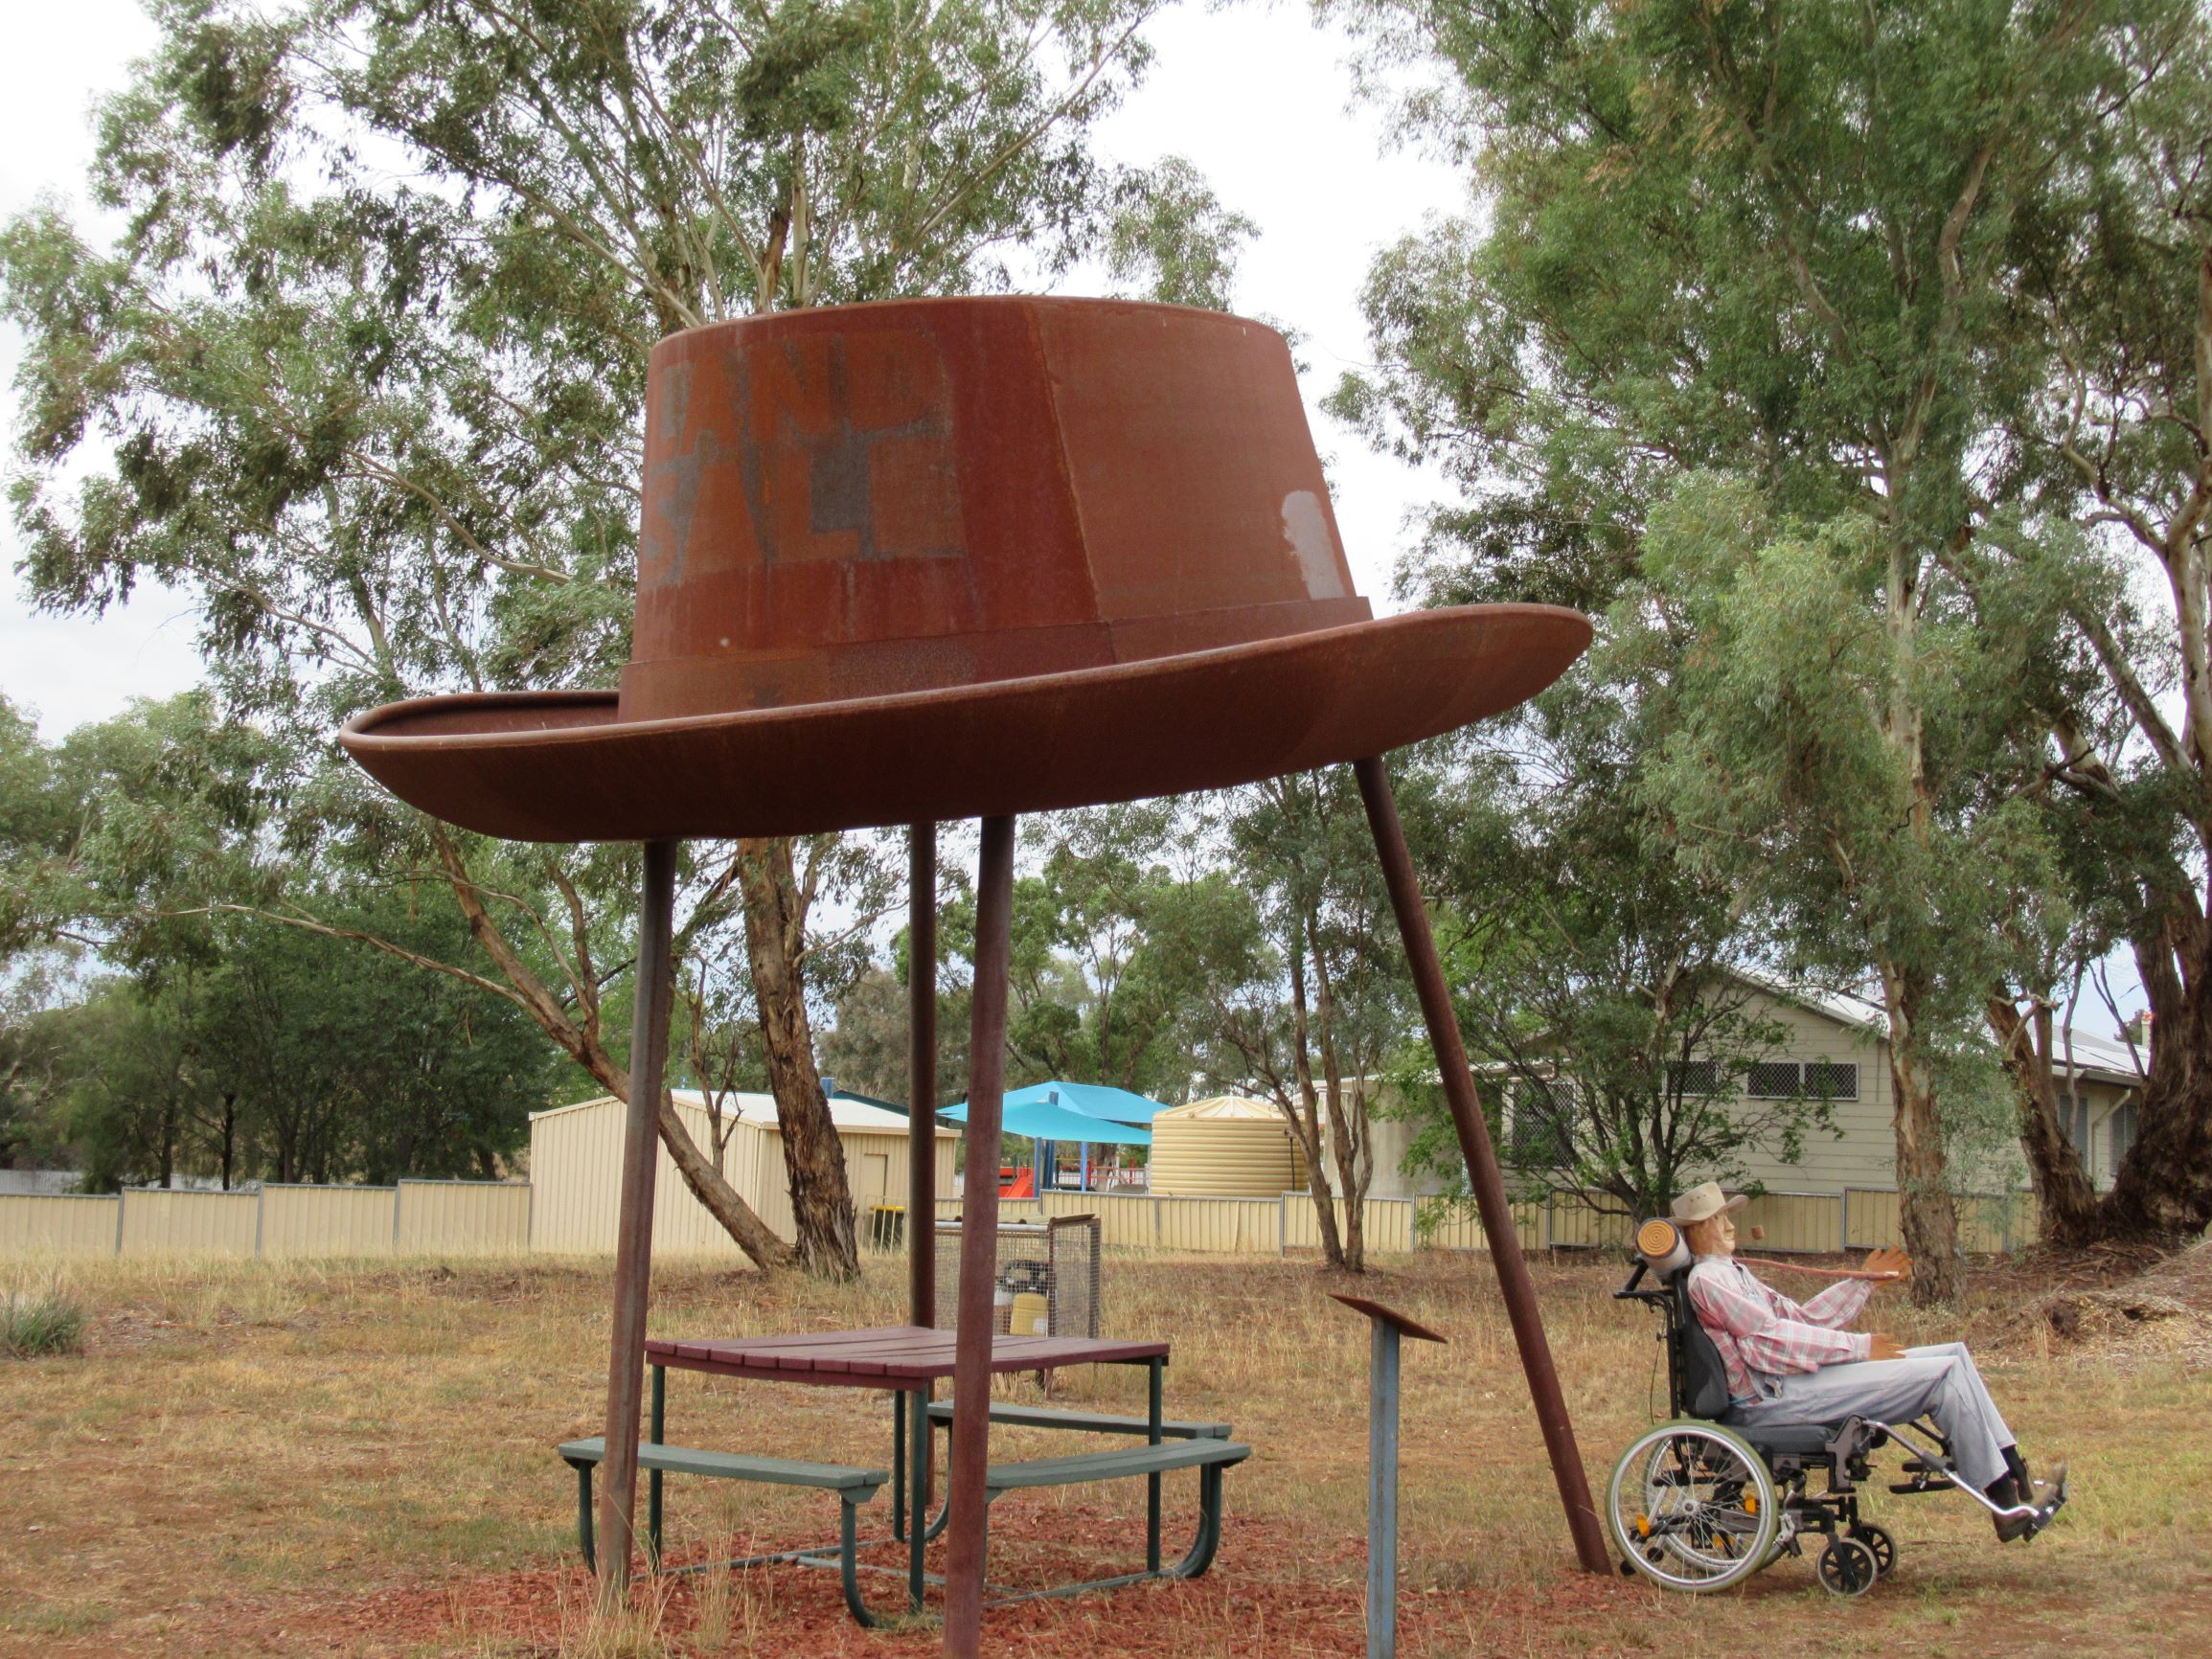 File:Big Hat sculpture.jpg - Wikipedia